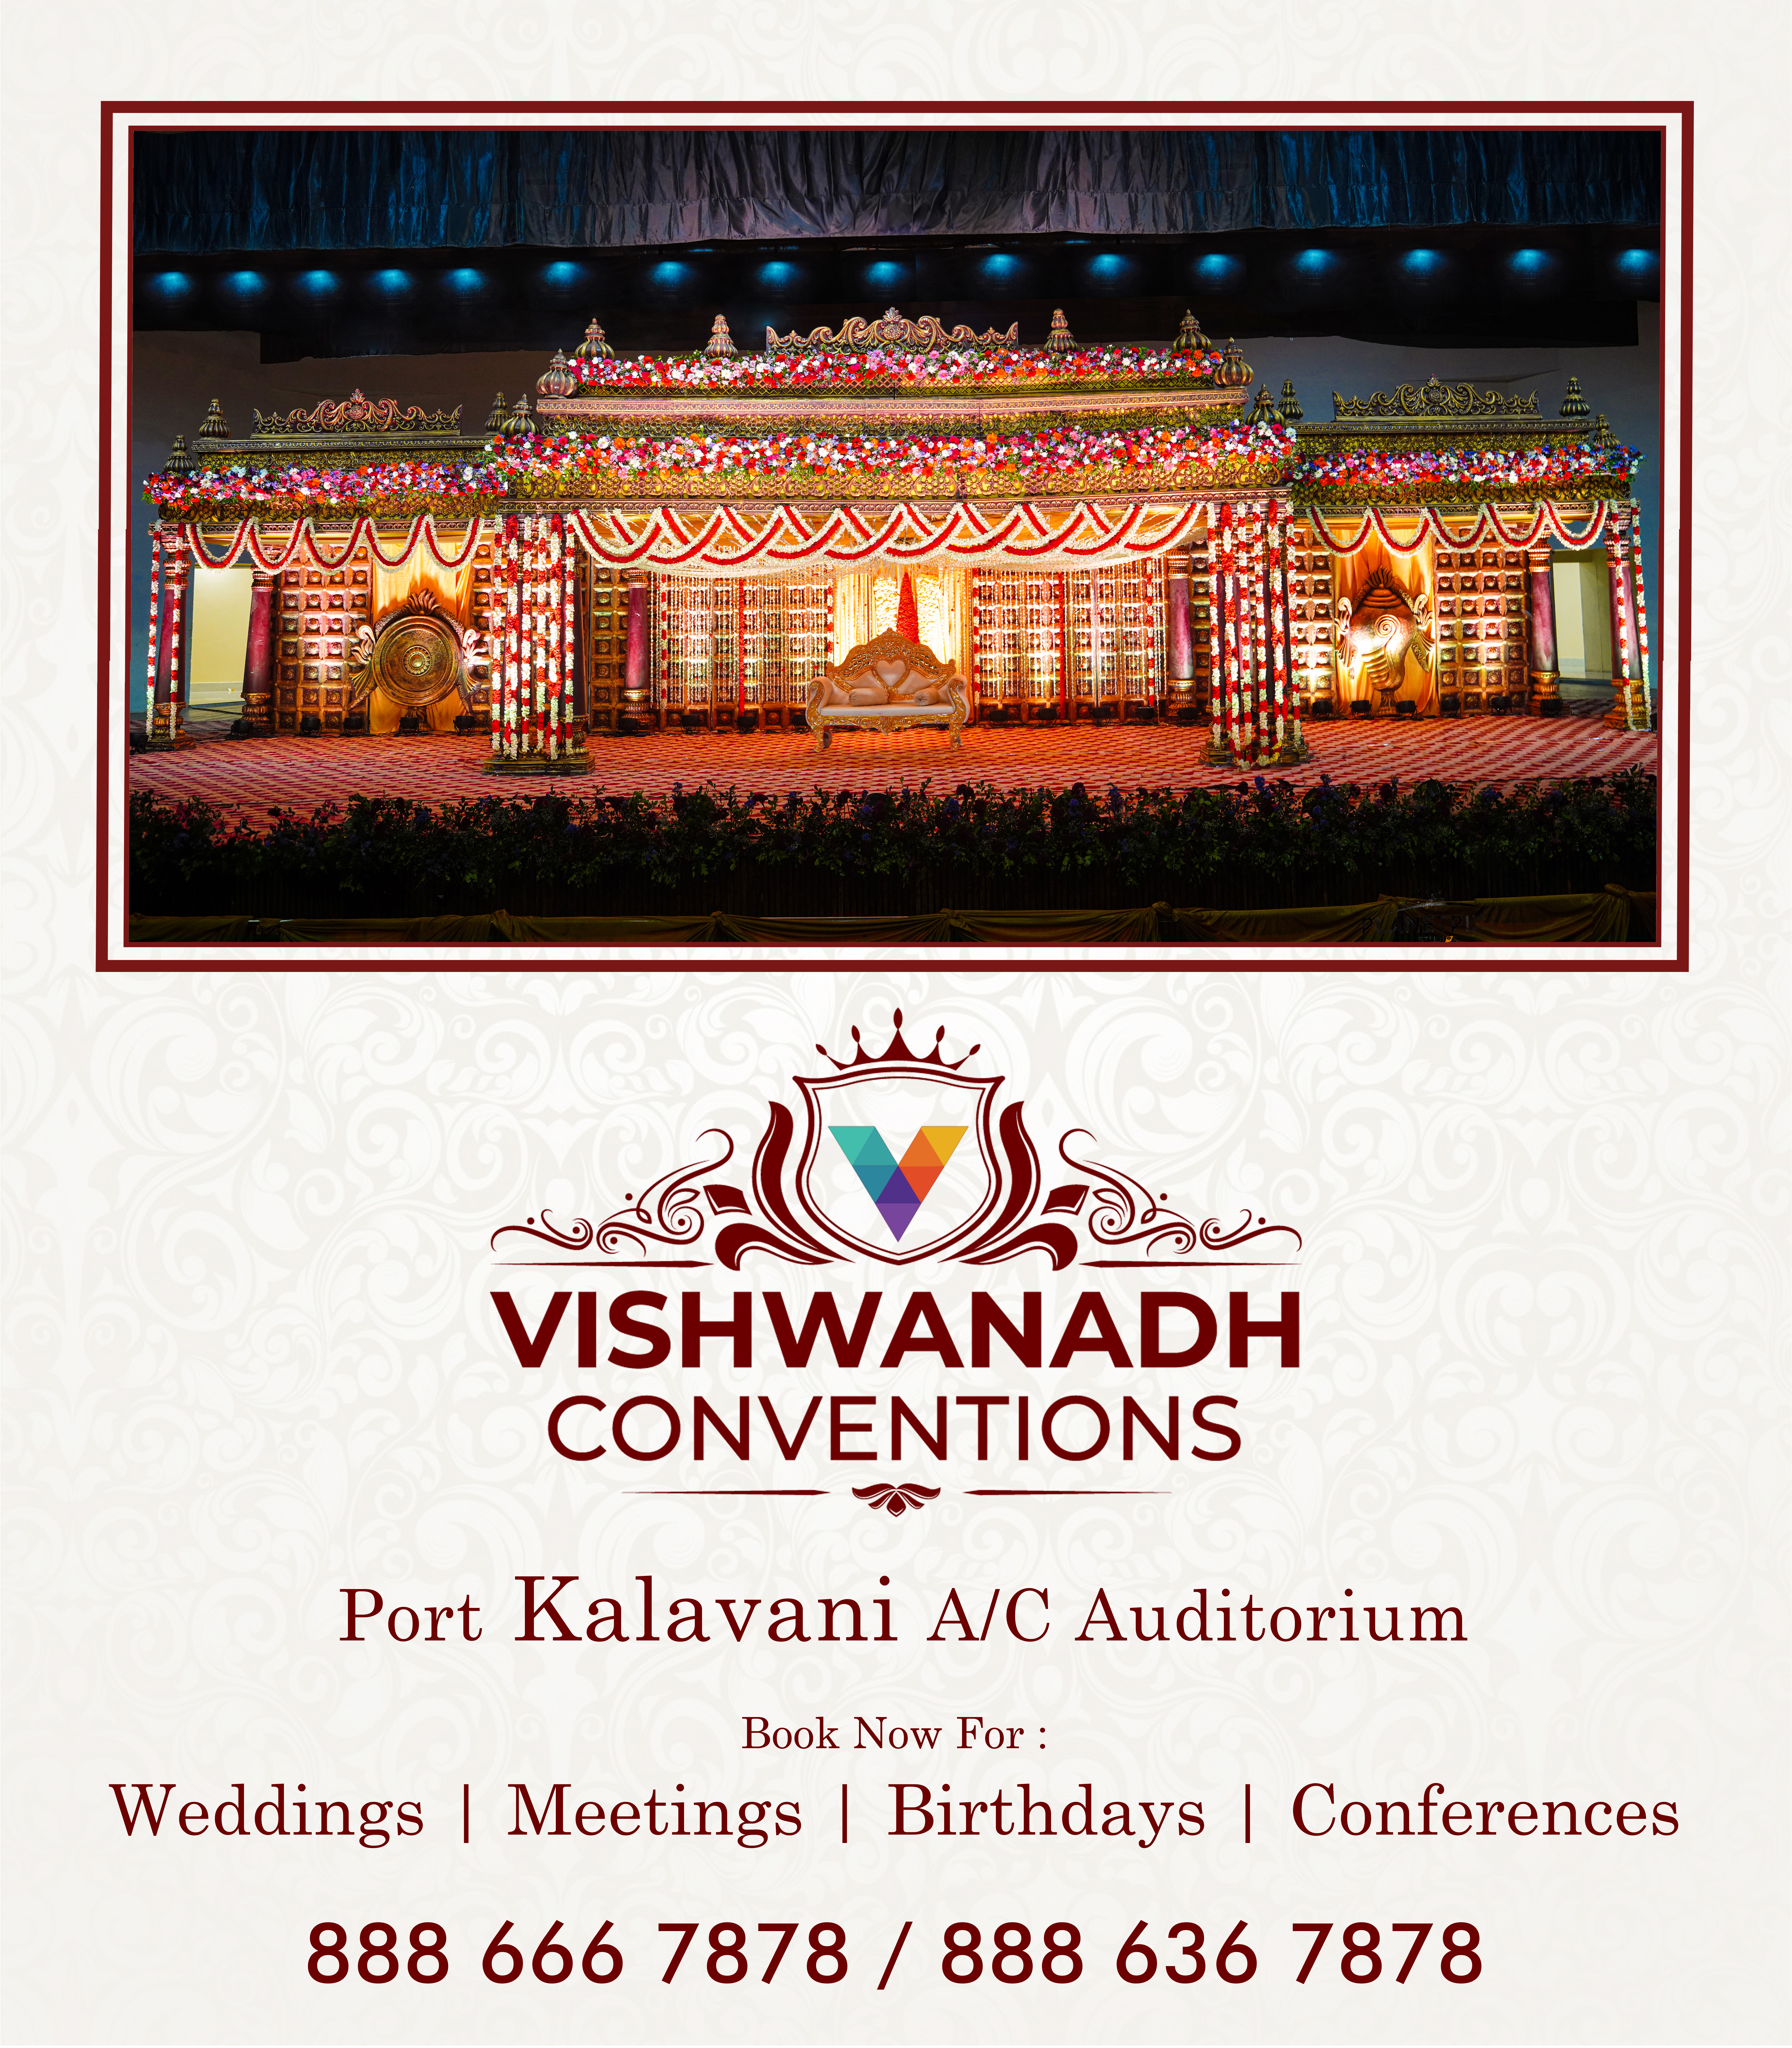 Vishwanadh conventions